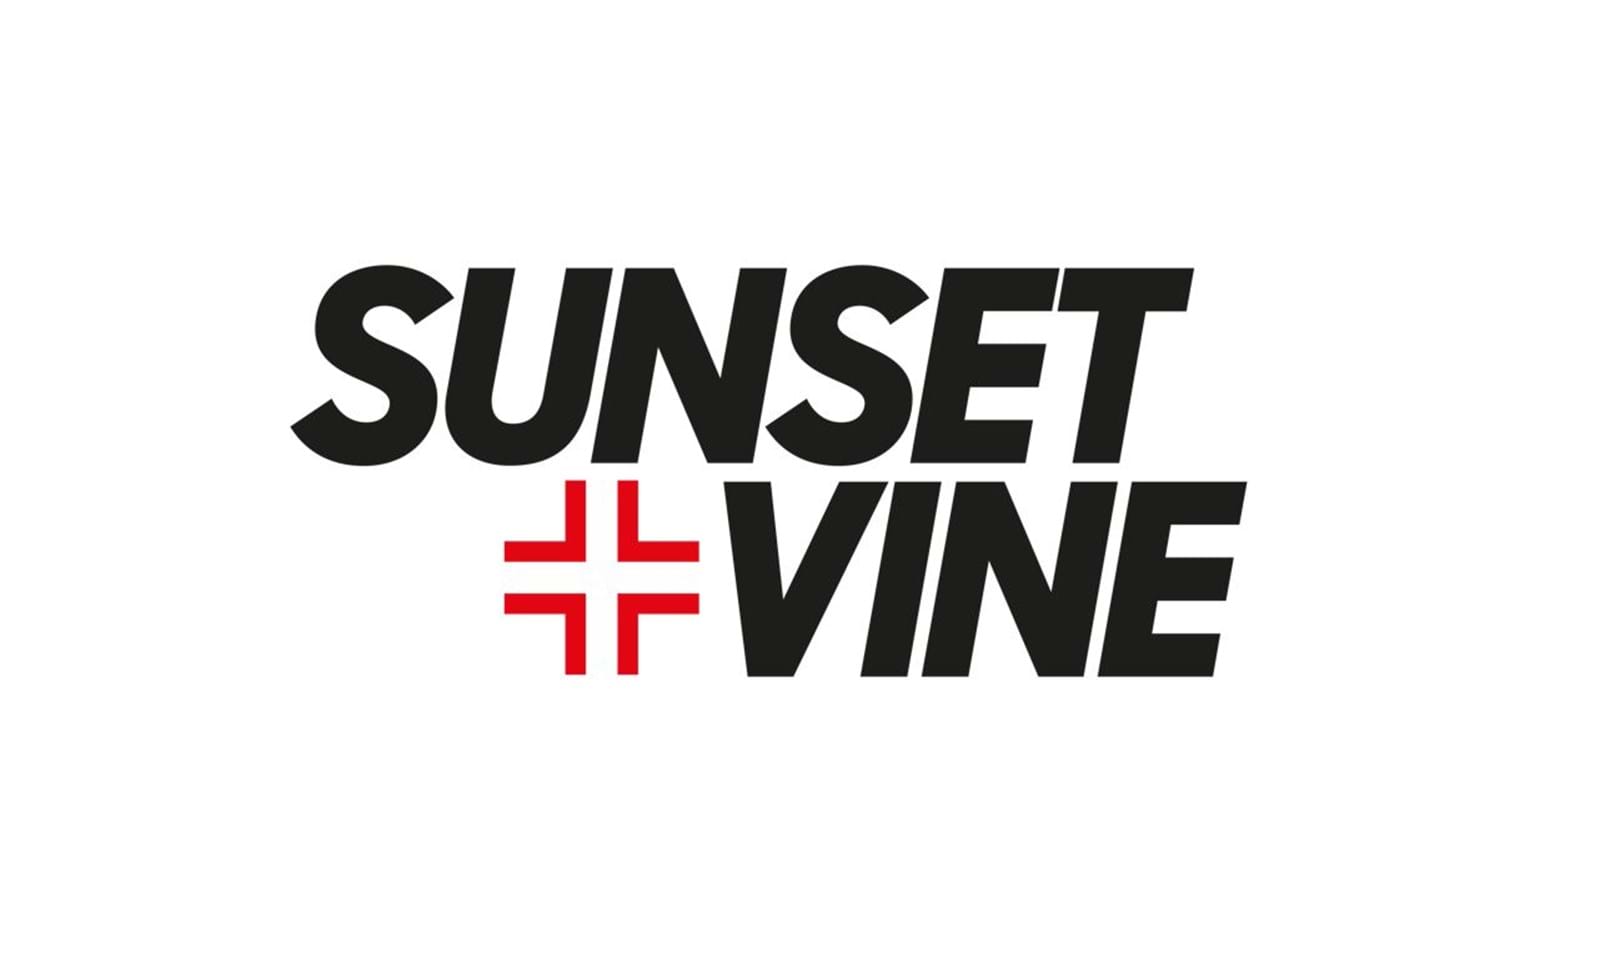 Sunset+Vine is New BBC ALBA Sport Production Partner 